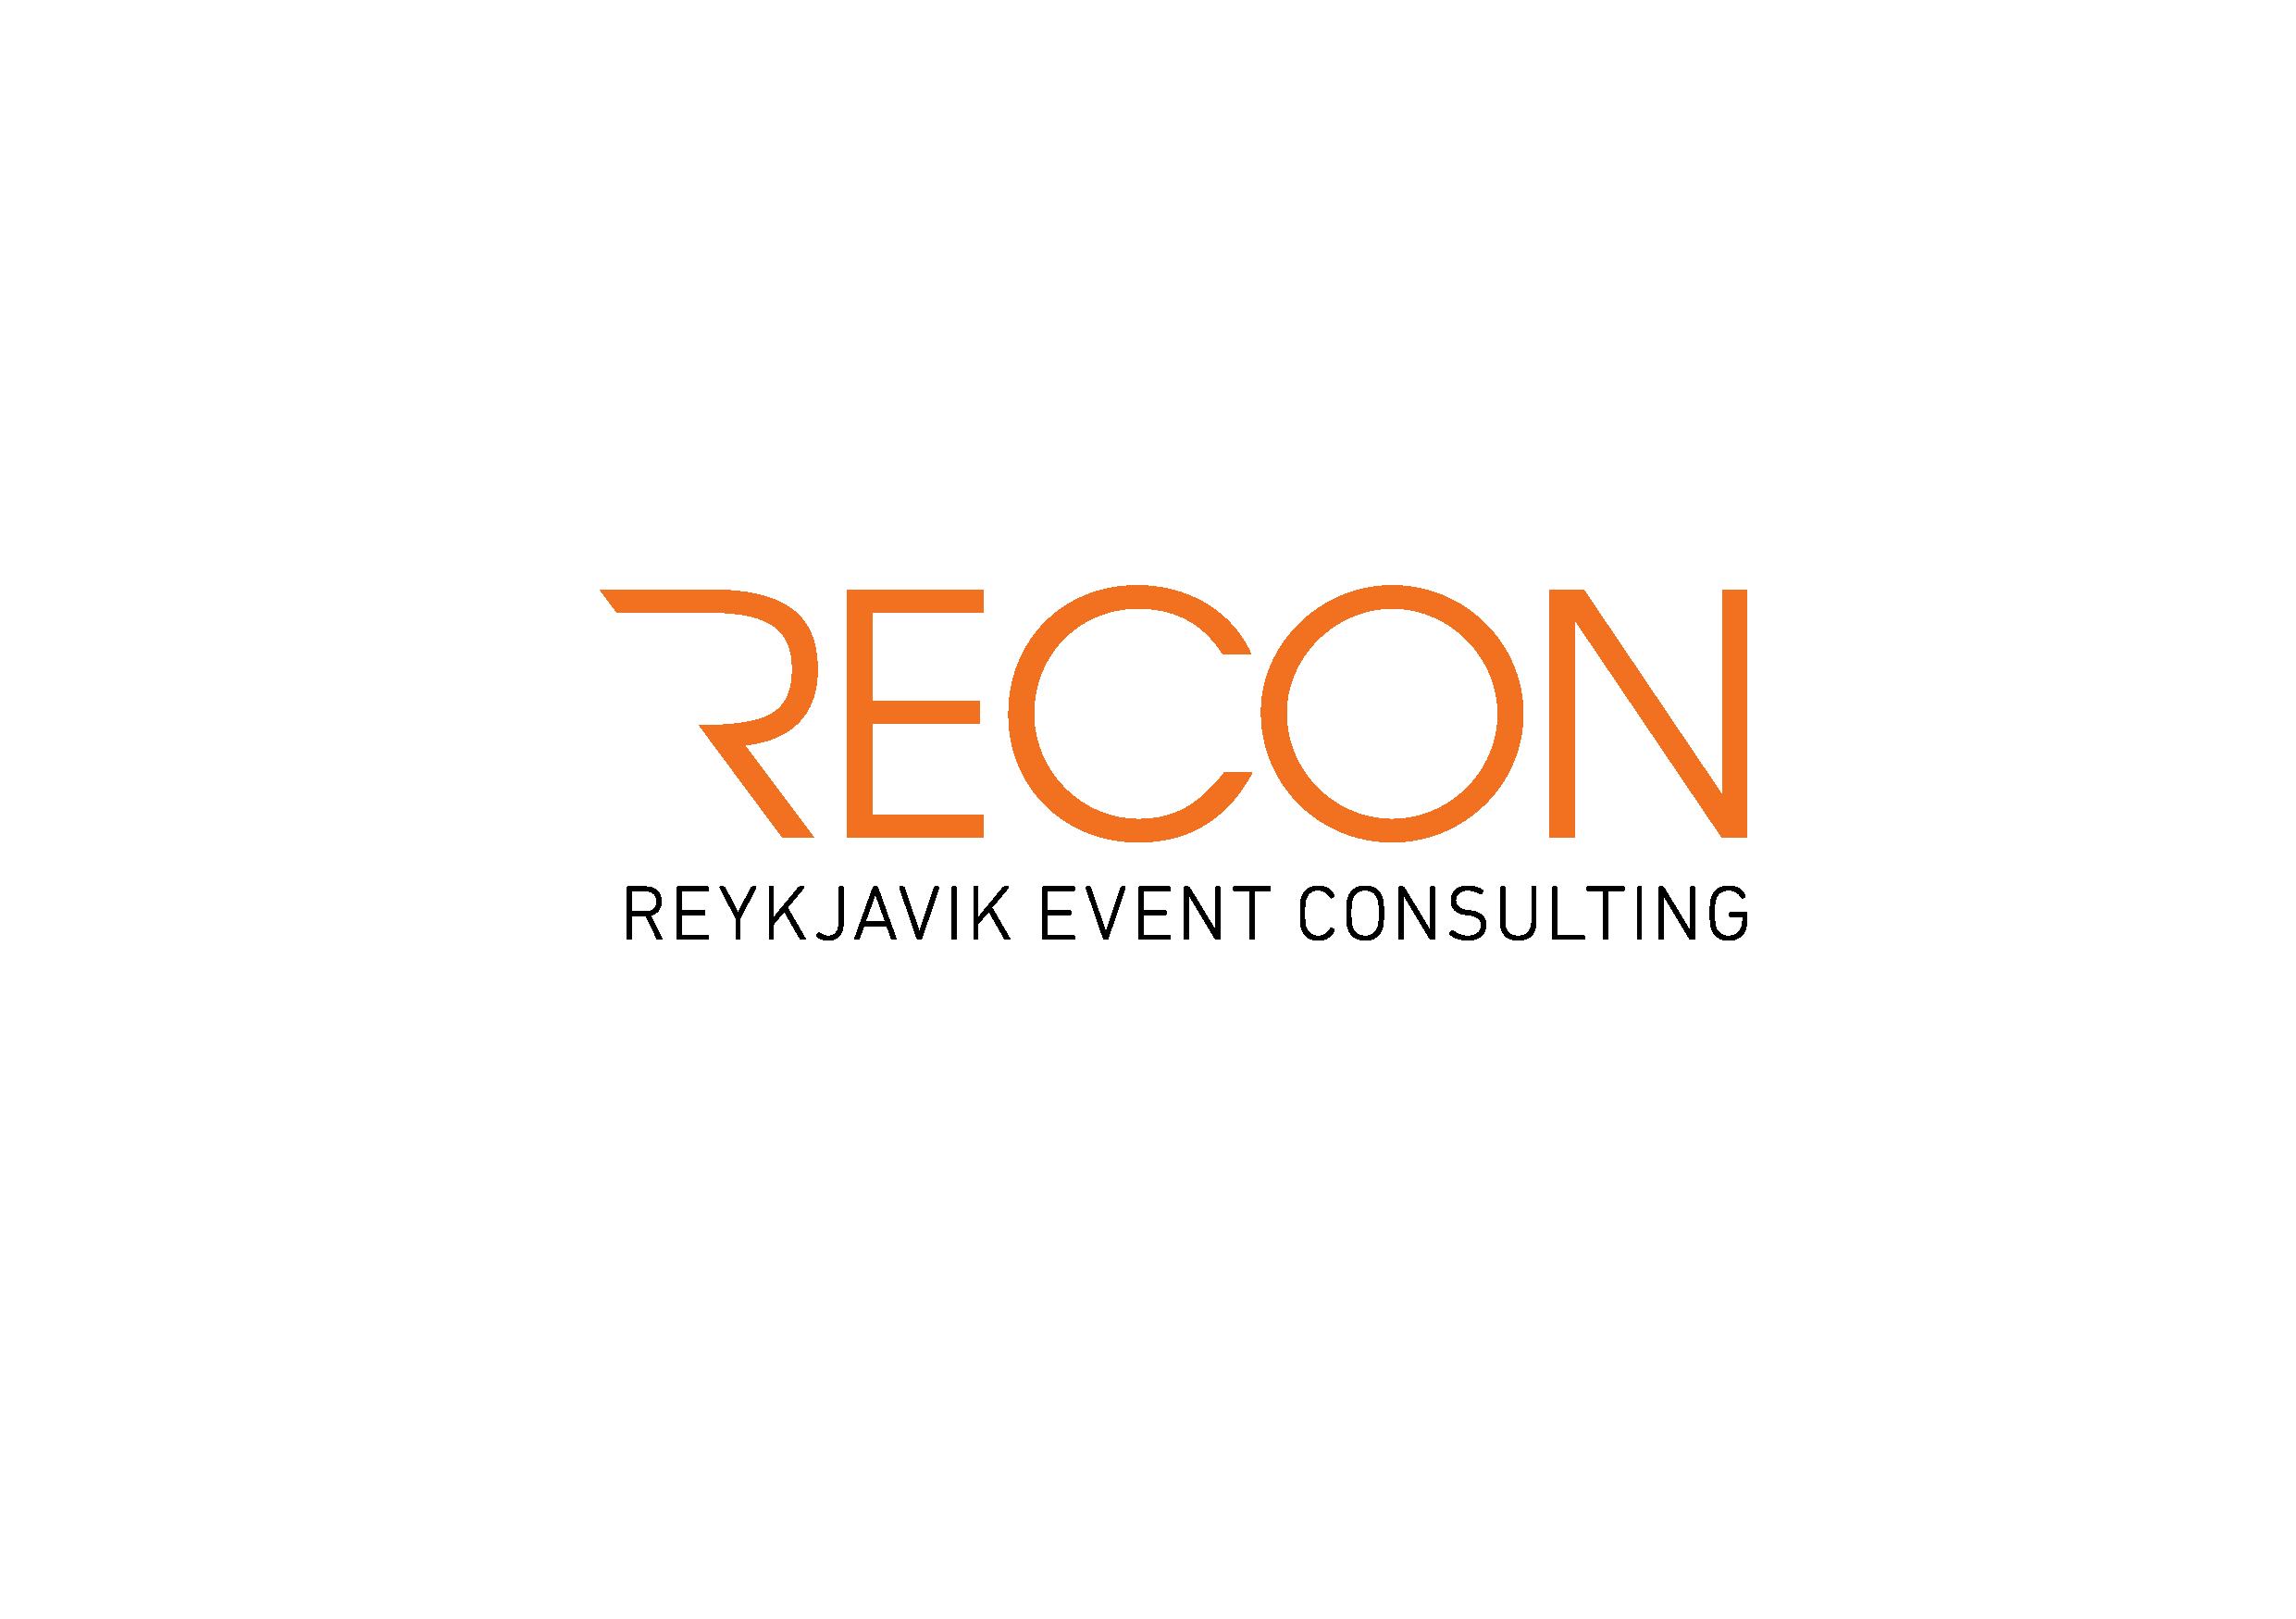 Recon Reykjavik Event Consulting Meet in Reykjavik